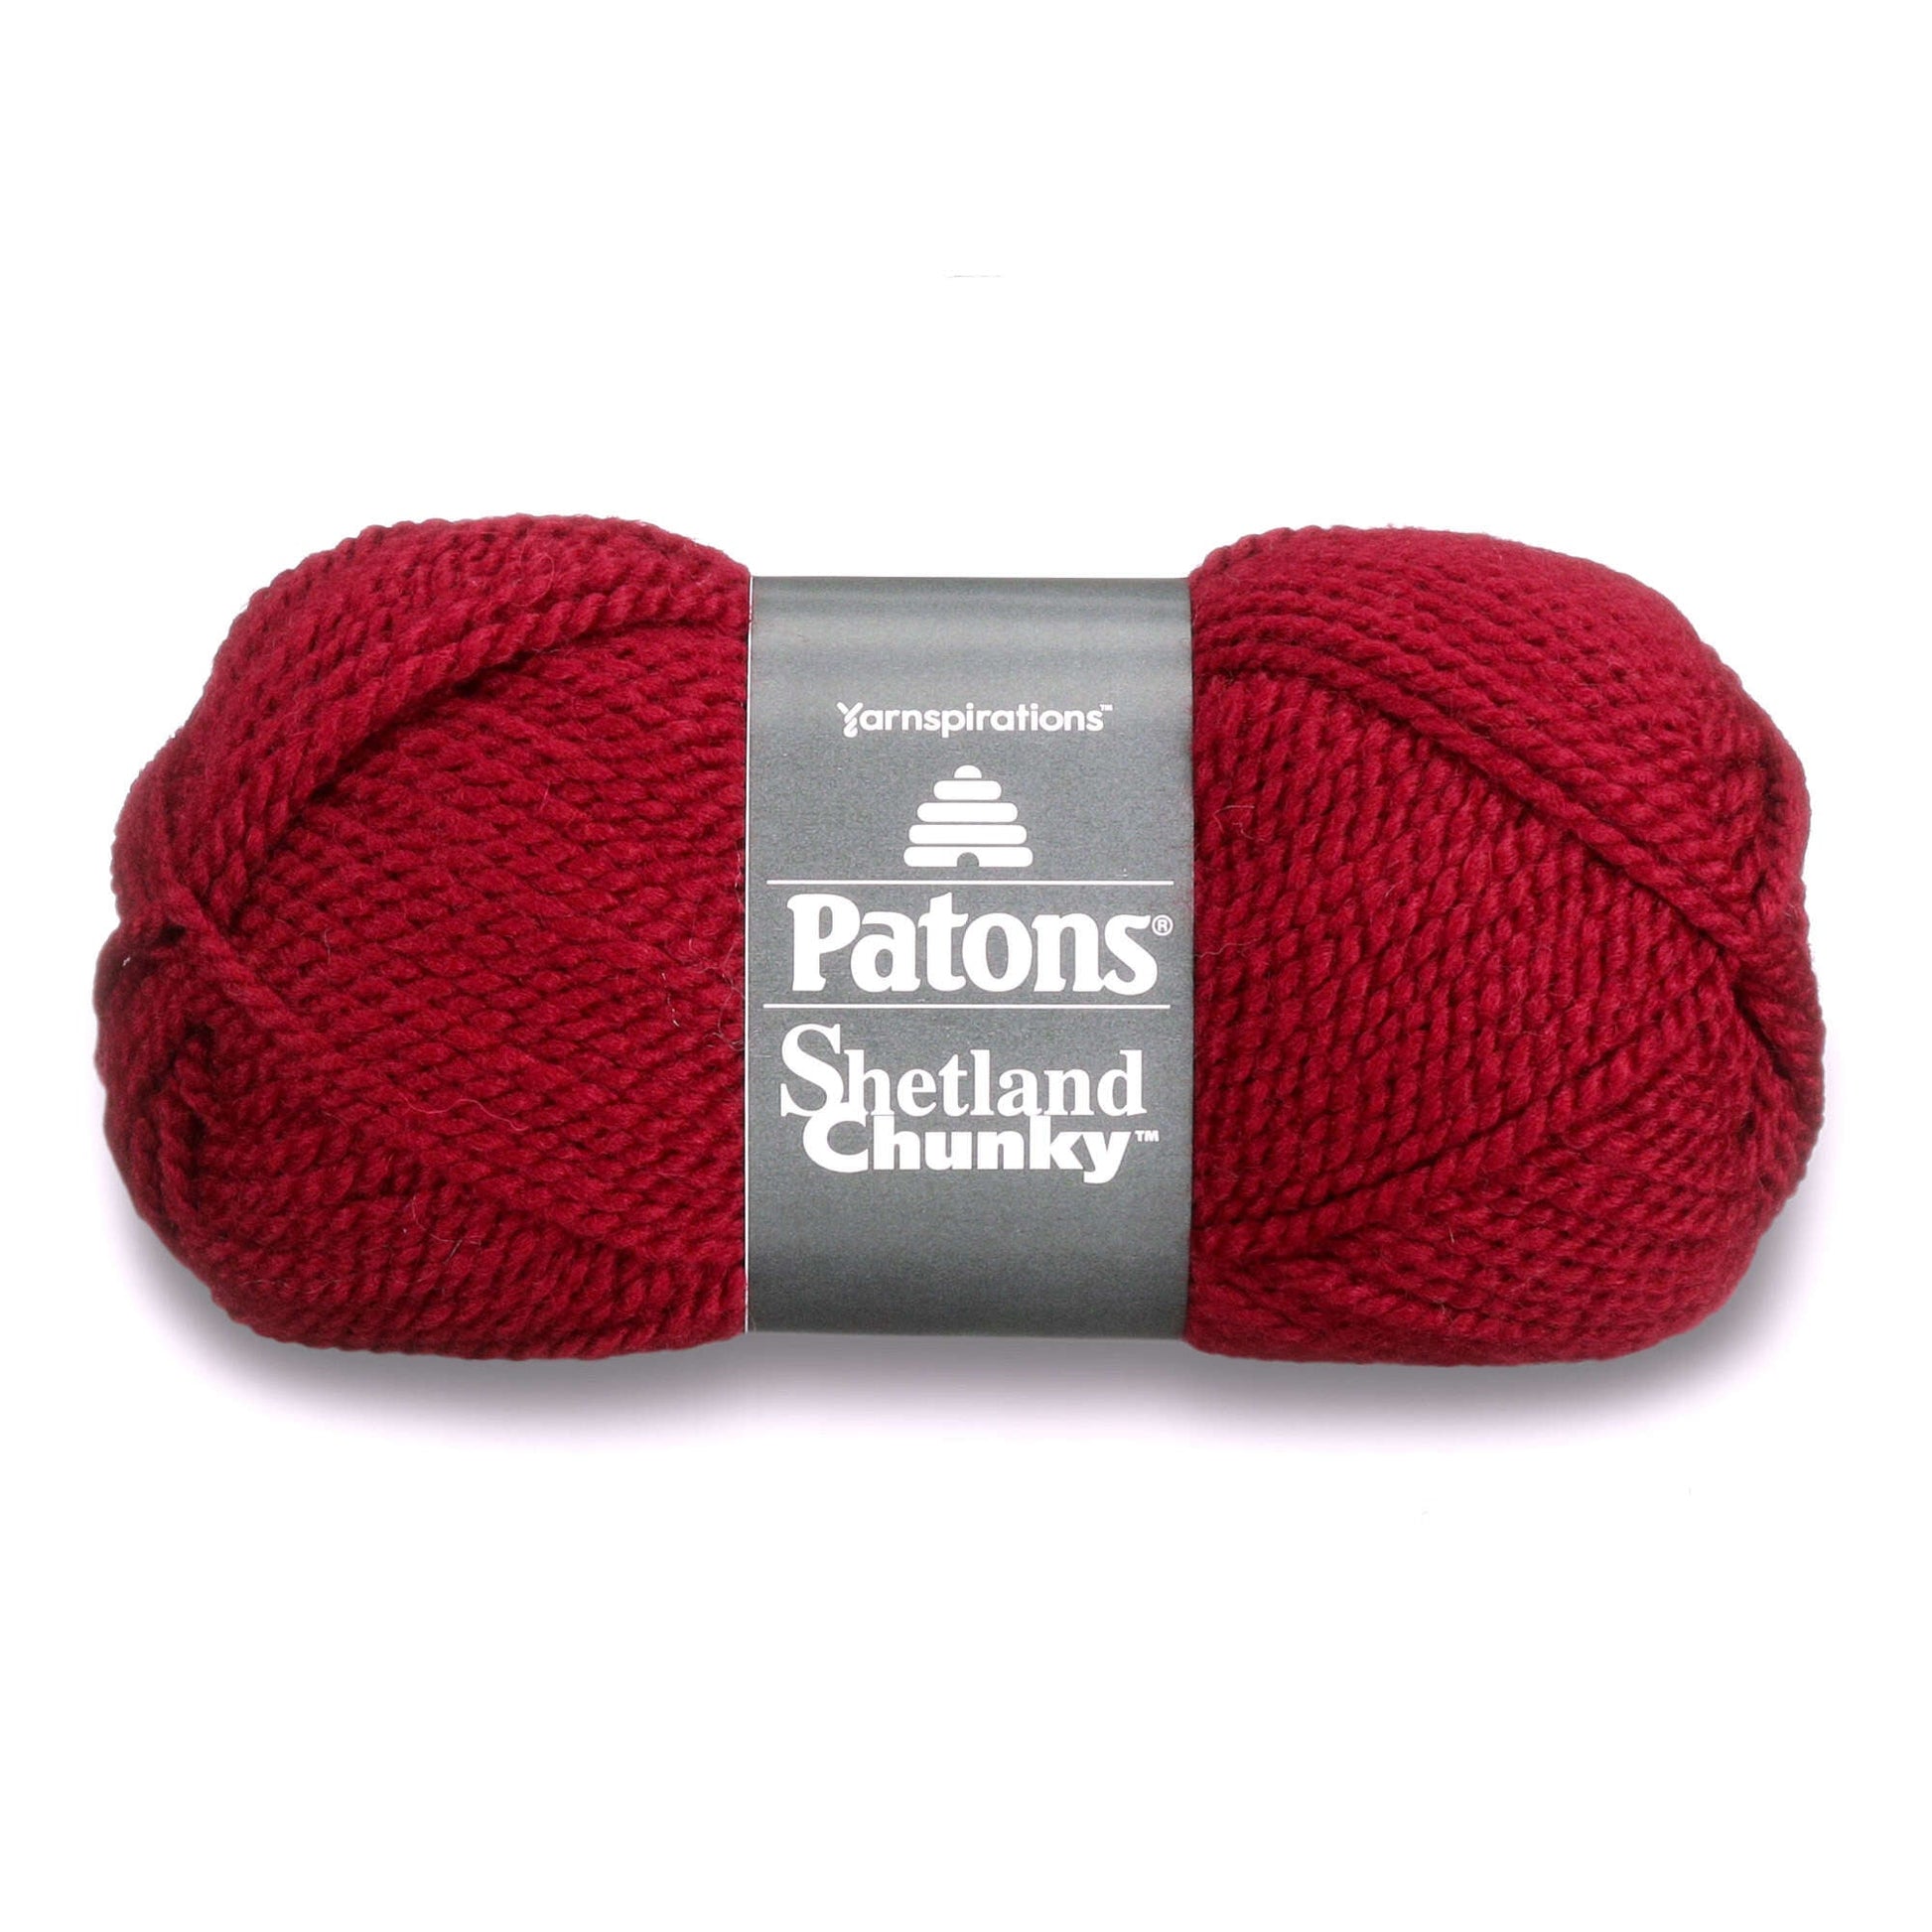 Patons Shetland Chunky Yarn - Discontinued Shades